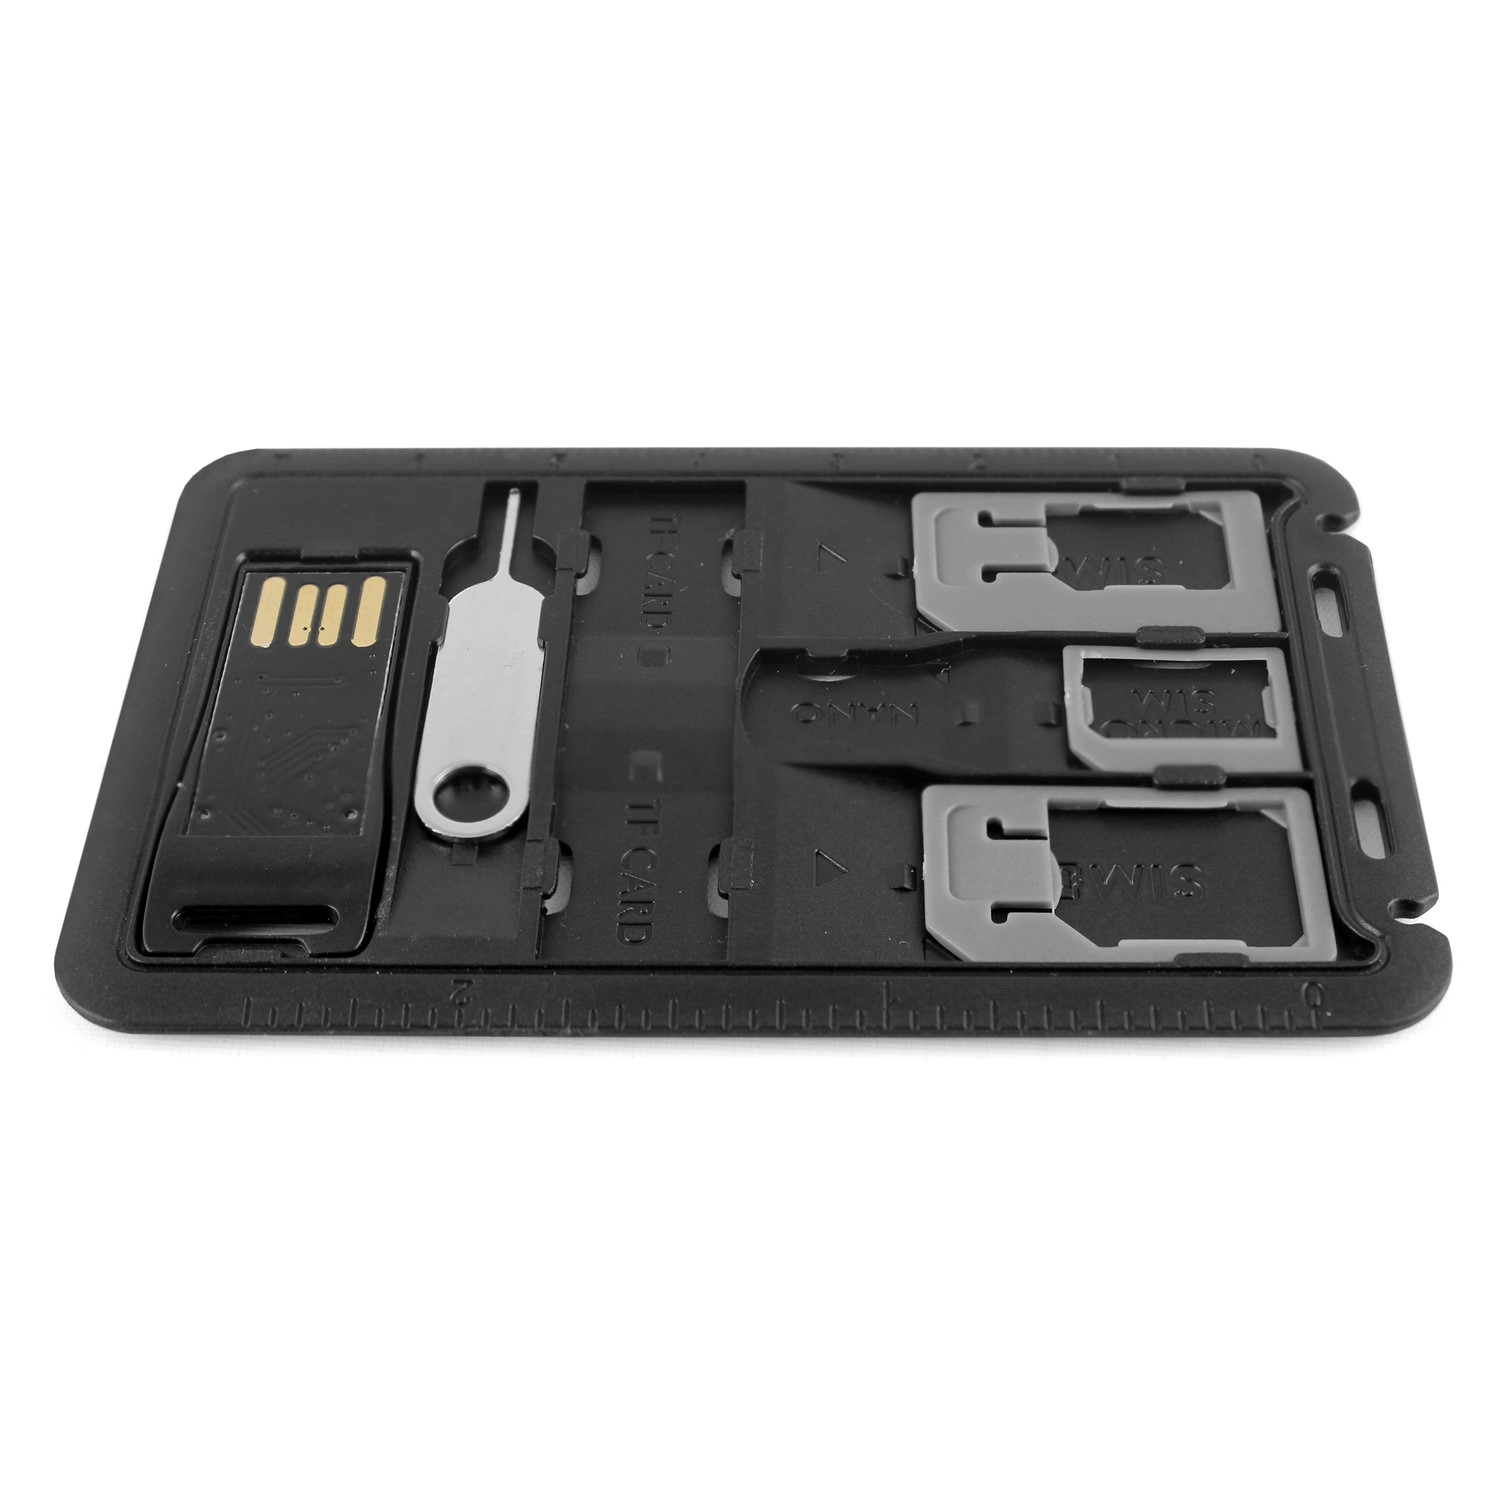 2 Nano Sim Card Holders,Metal Aluminum Alloy SD Card Holder Case Mobile Phone Memory Card Storage Bag Silver Myymee 2 SIM Standard Card Card Holders 2 Micro Card Holders 